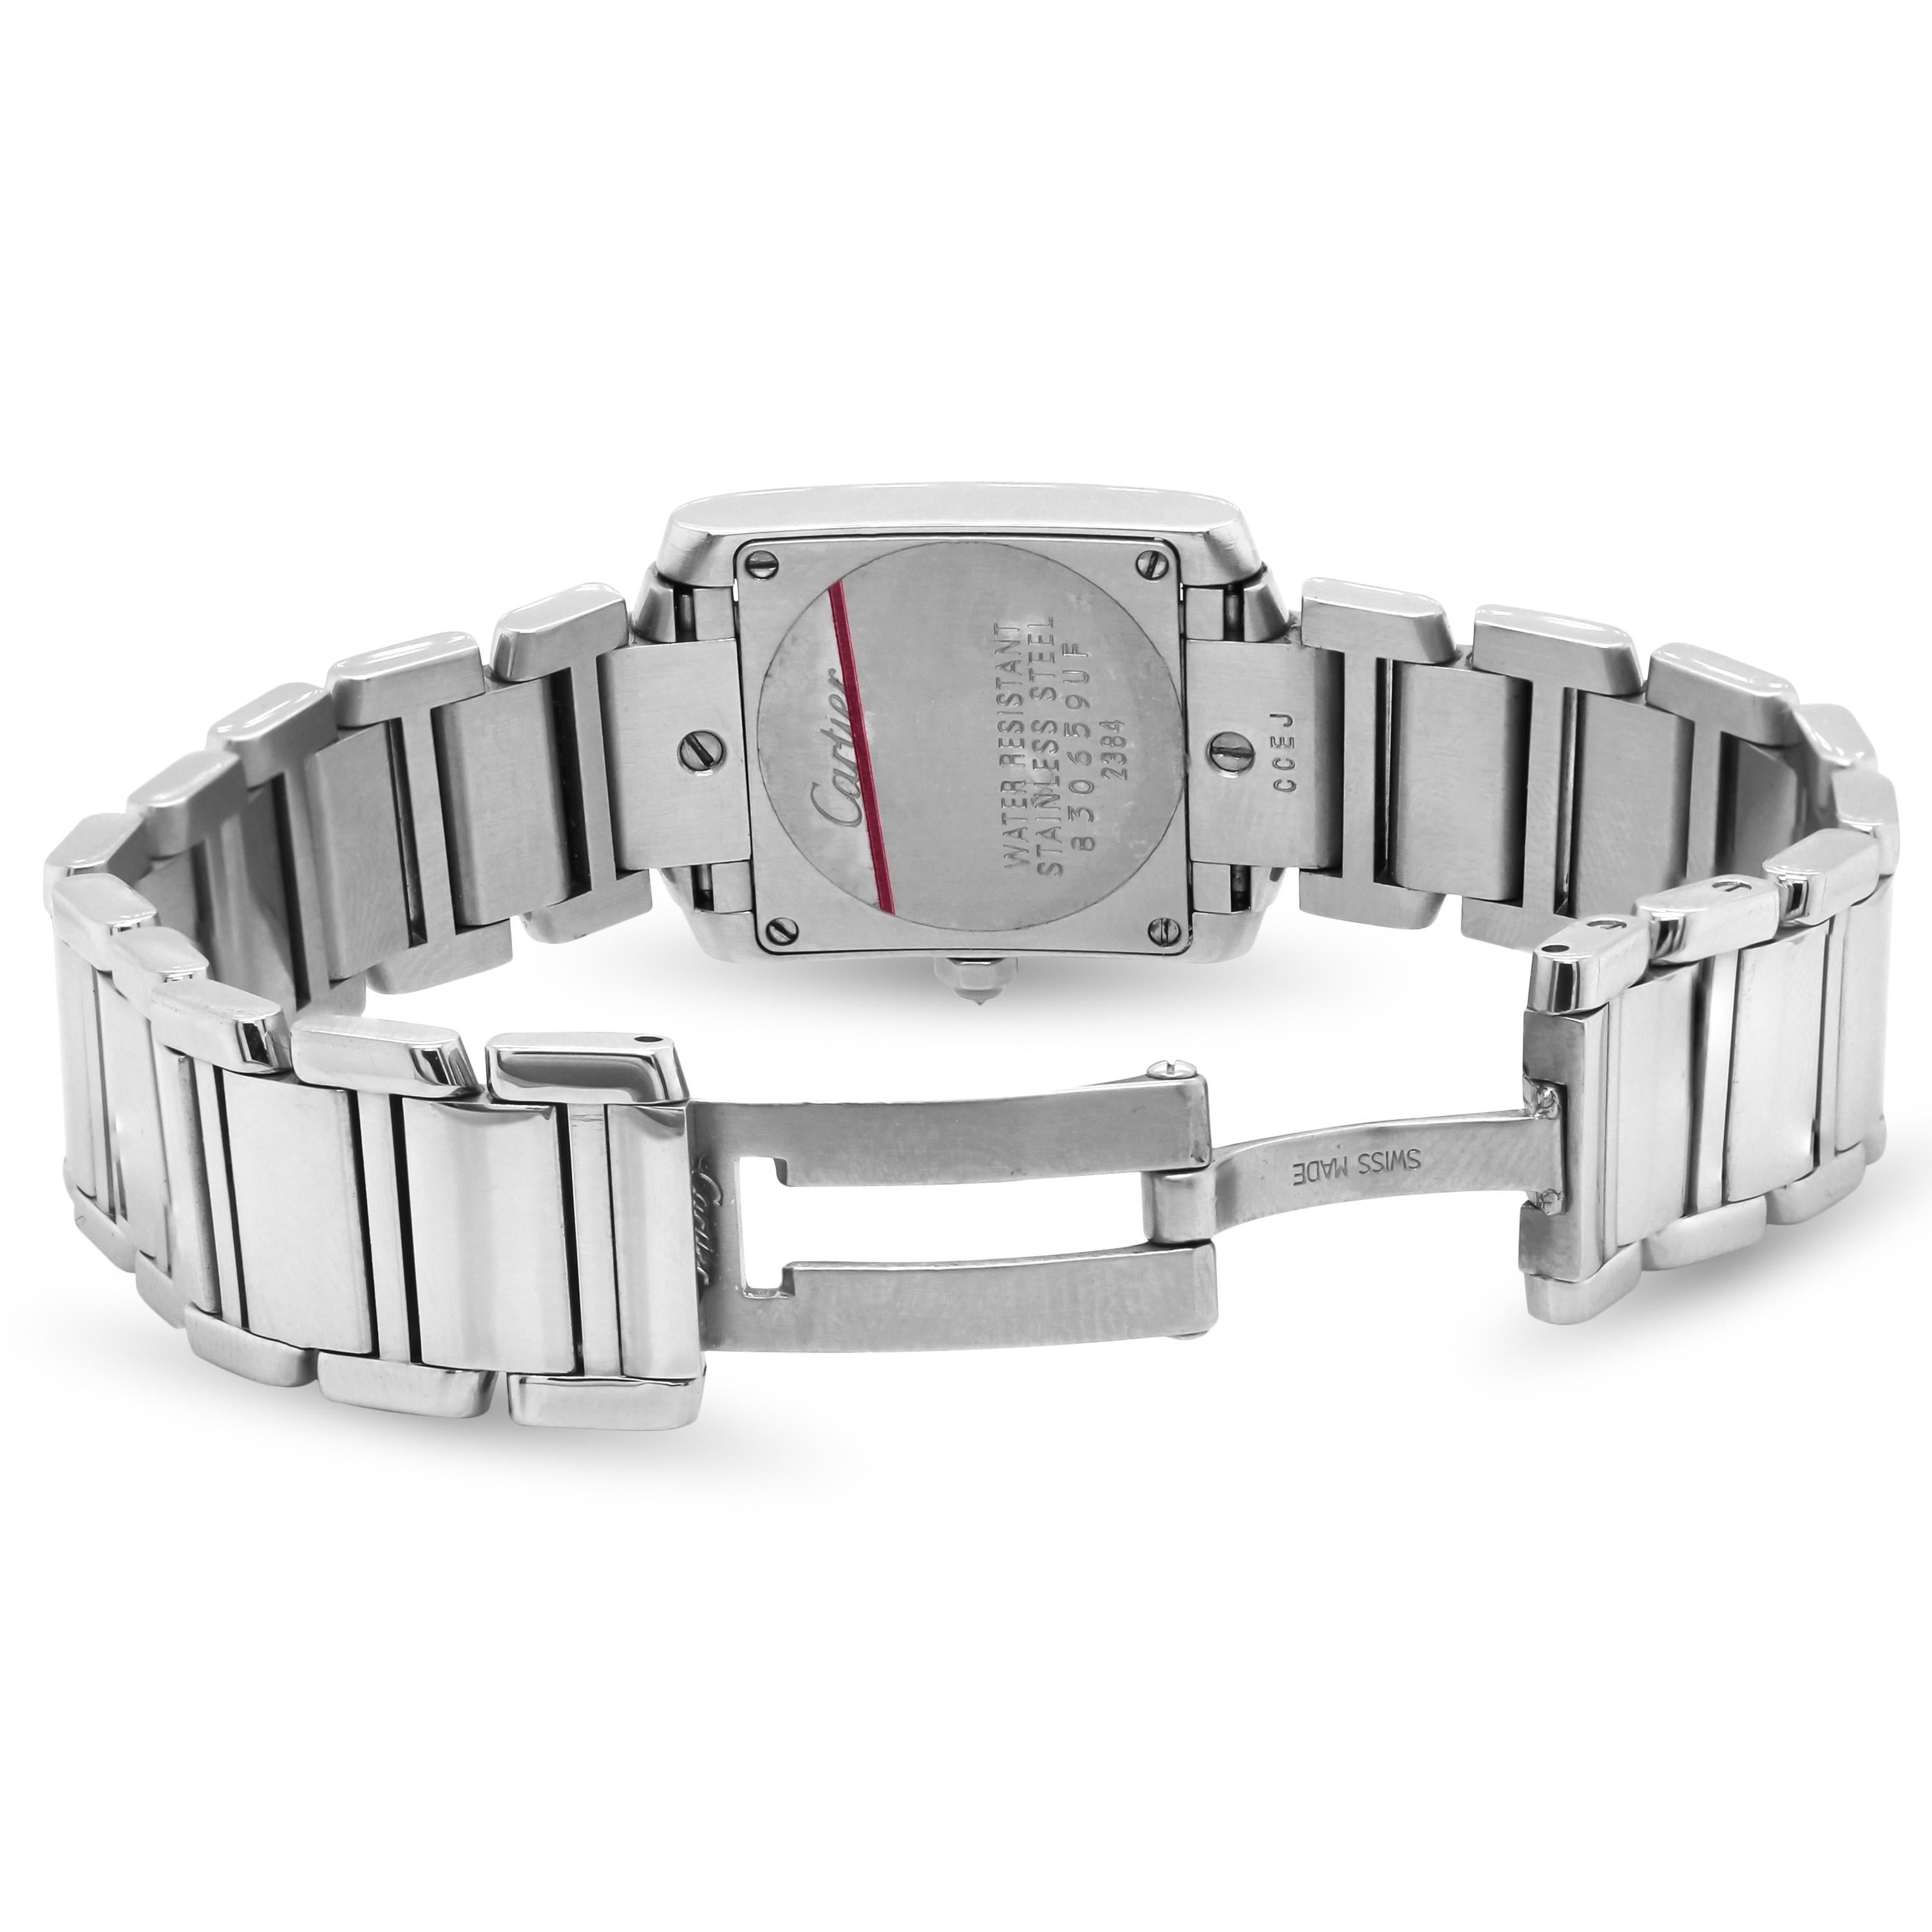 Cartier Tank Francaise Stainless Steel White Diamond Bezel Ladies Watch 2384 1